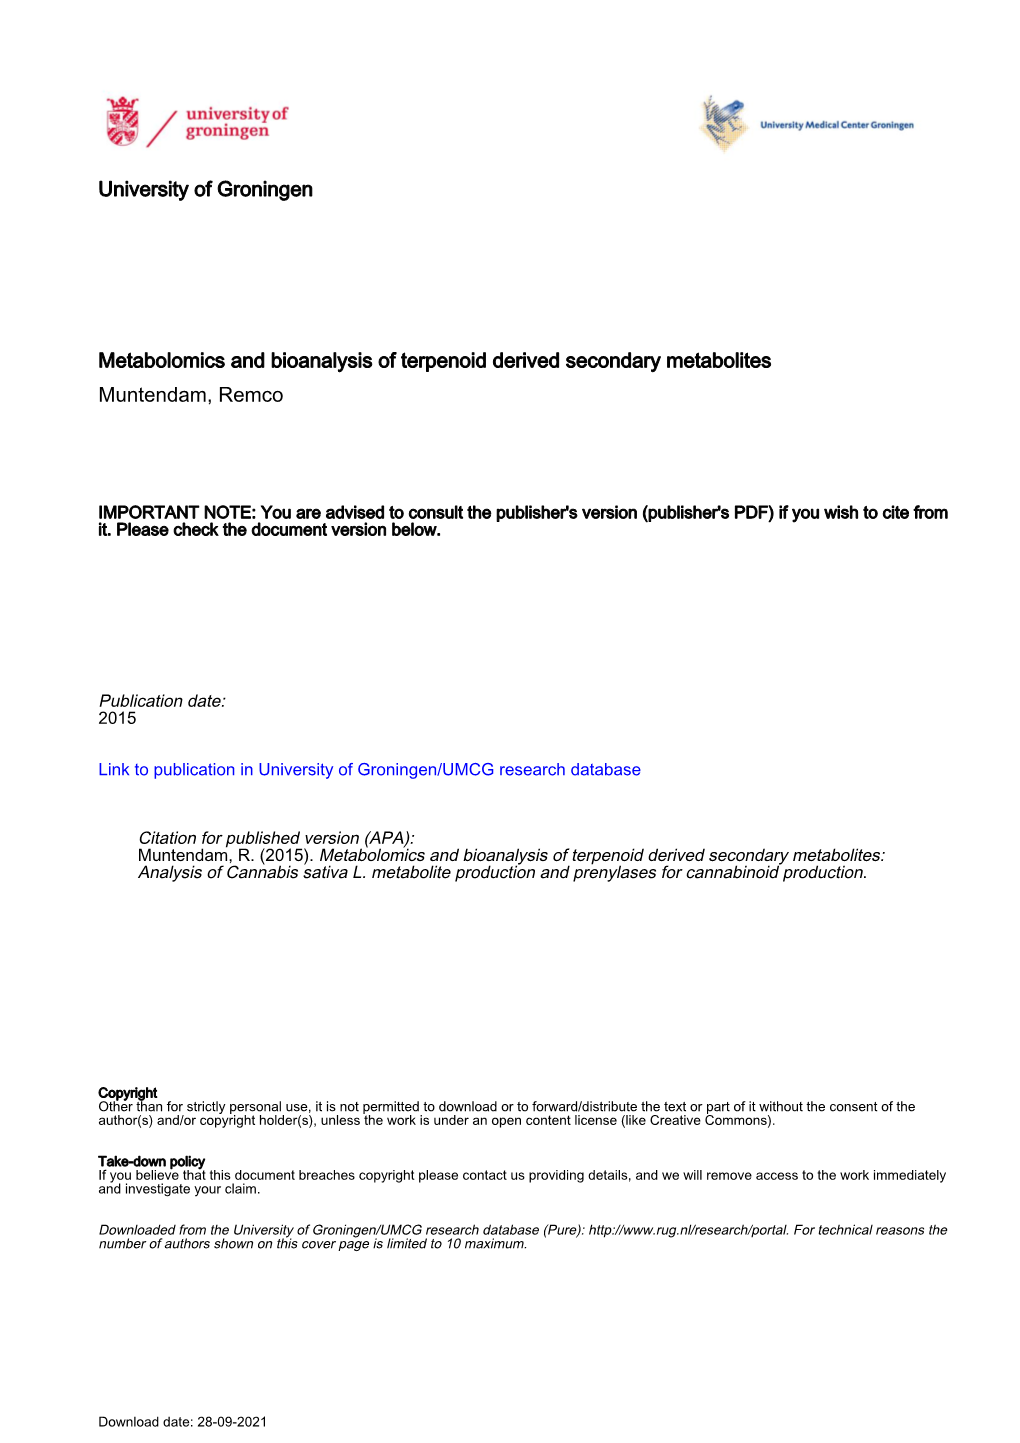 University of Groningen Metabolomics and Bioanalysis of Terpenoid Derived Secondary Metabolites Muntendam, Remco